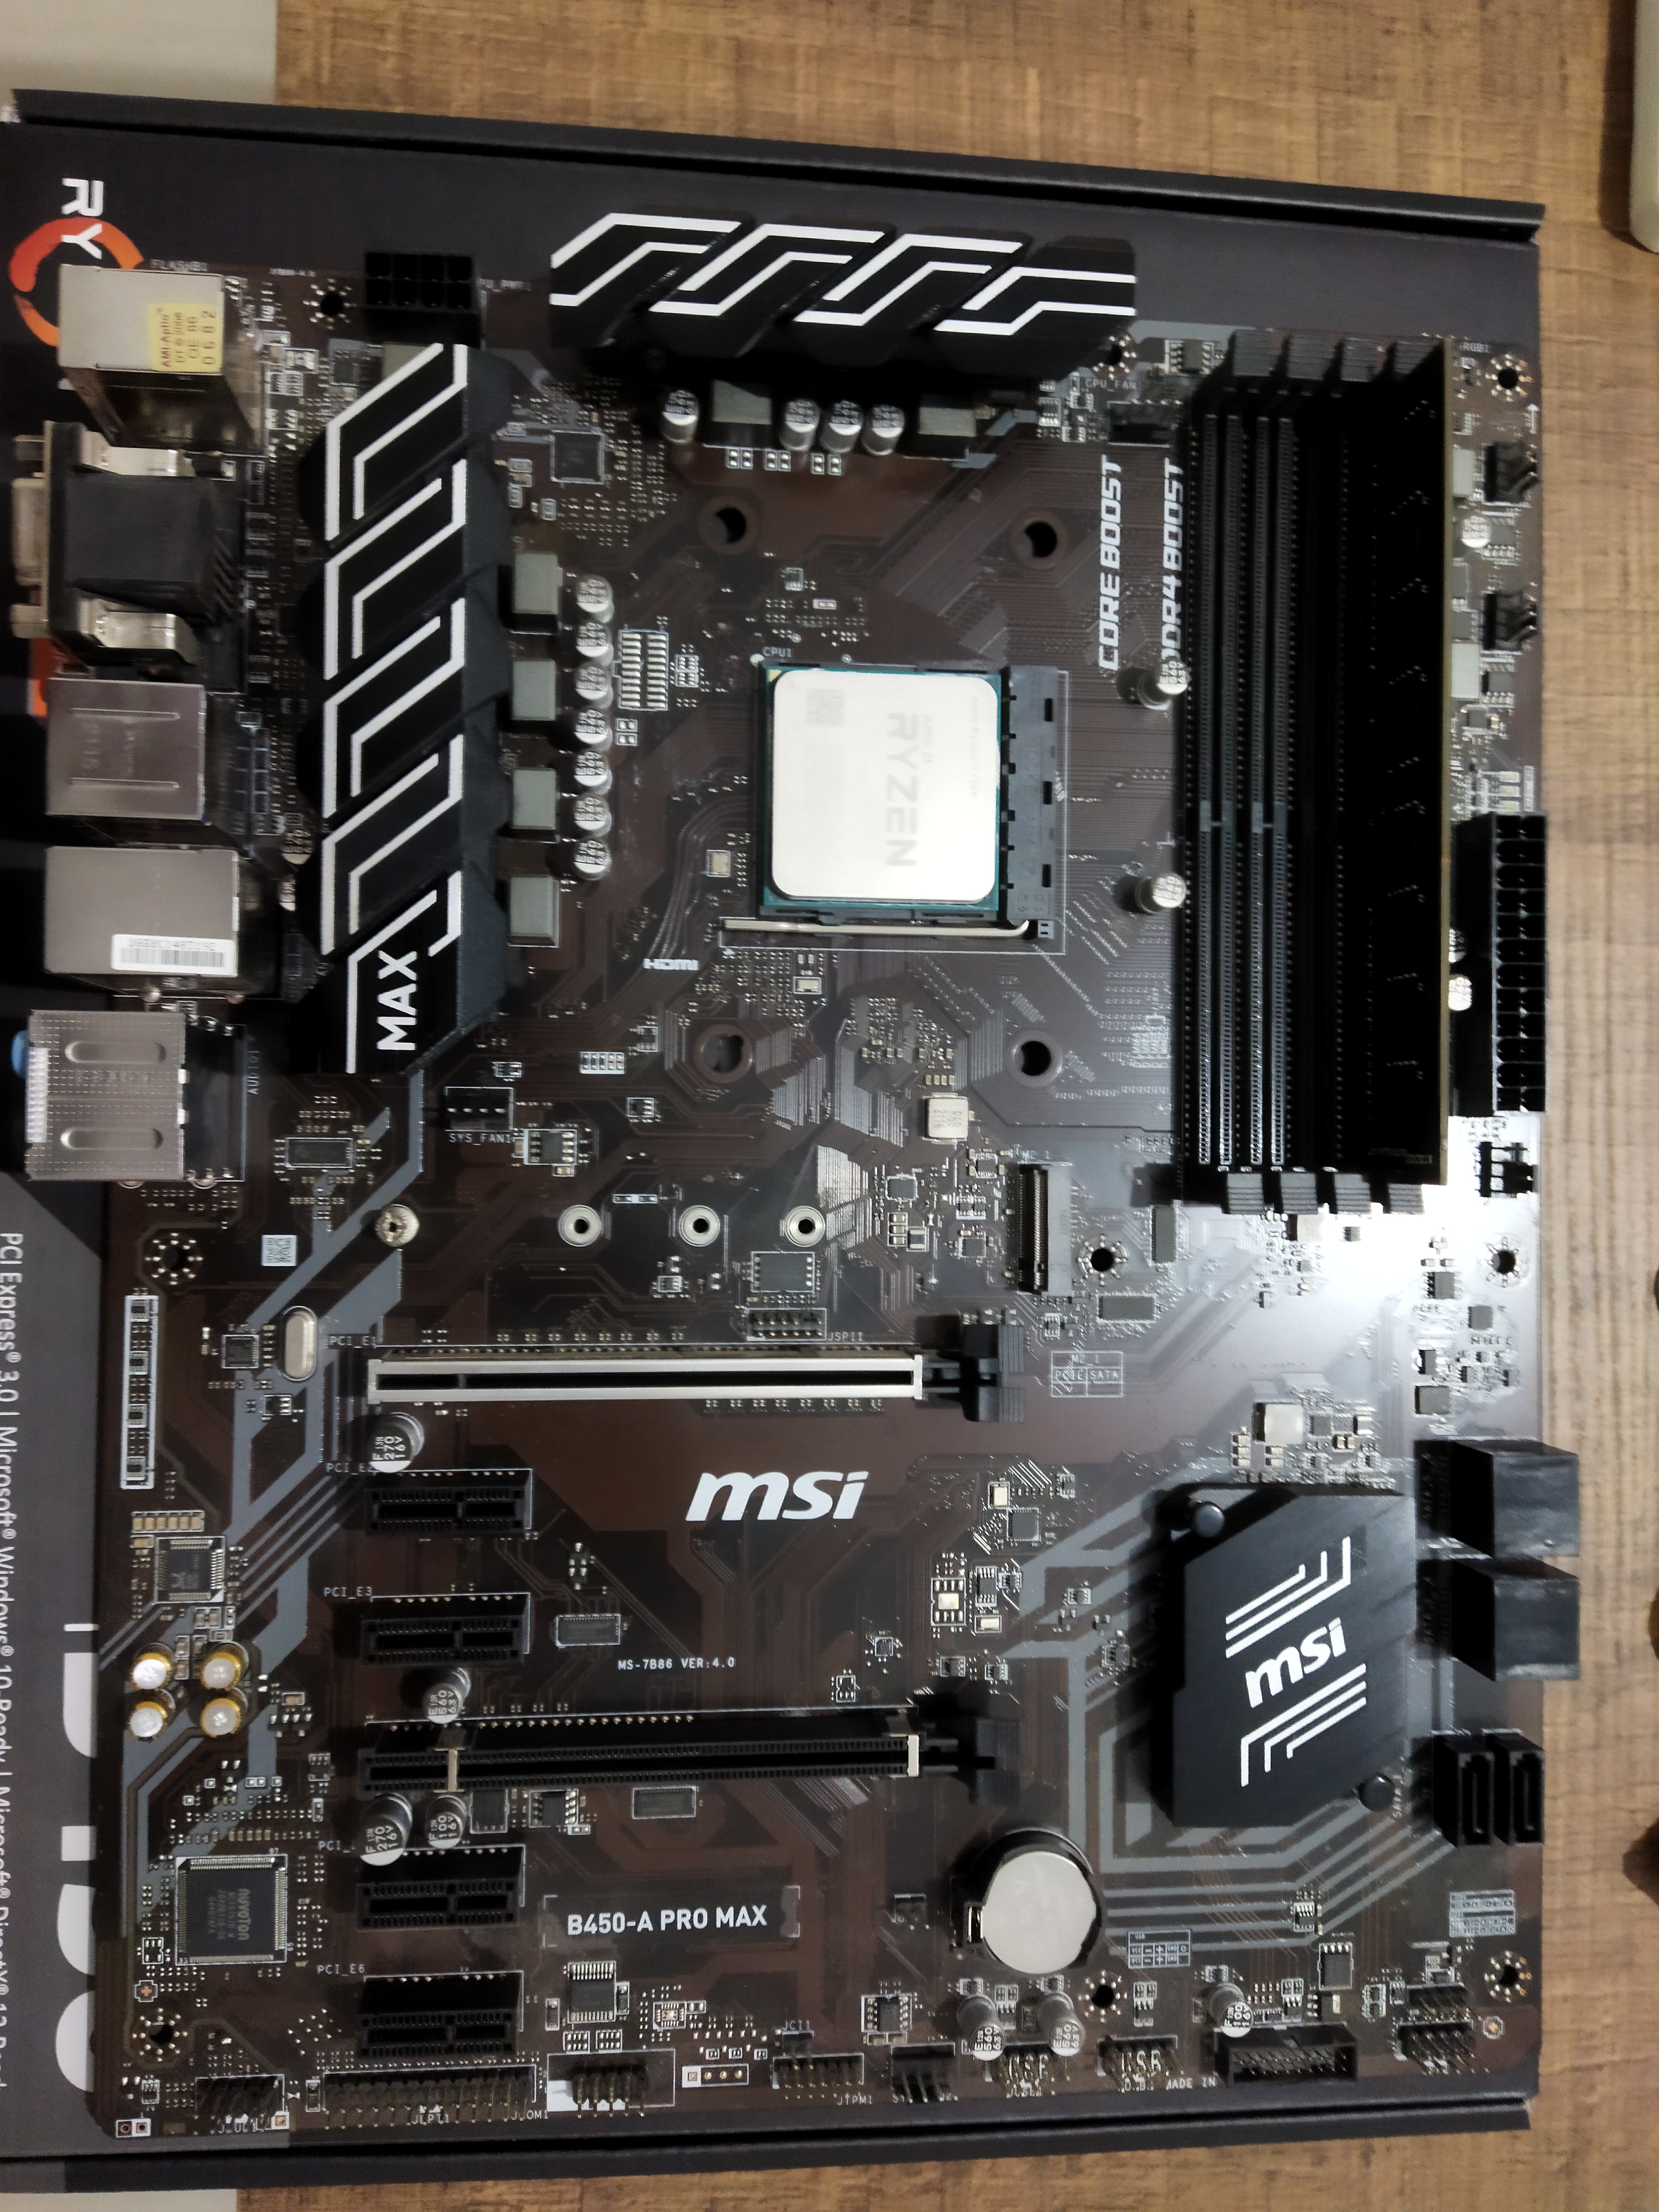 MSI B450-A PRO MAX + Ryzen 3 1200 + GSkill 8 GB DDR4 SET - SATILDI |  DonanımHaber Forum